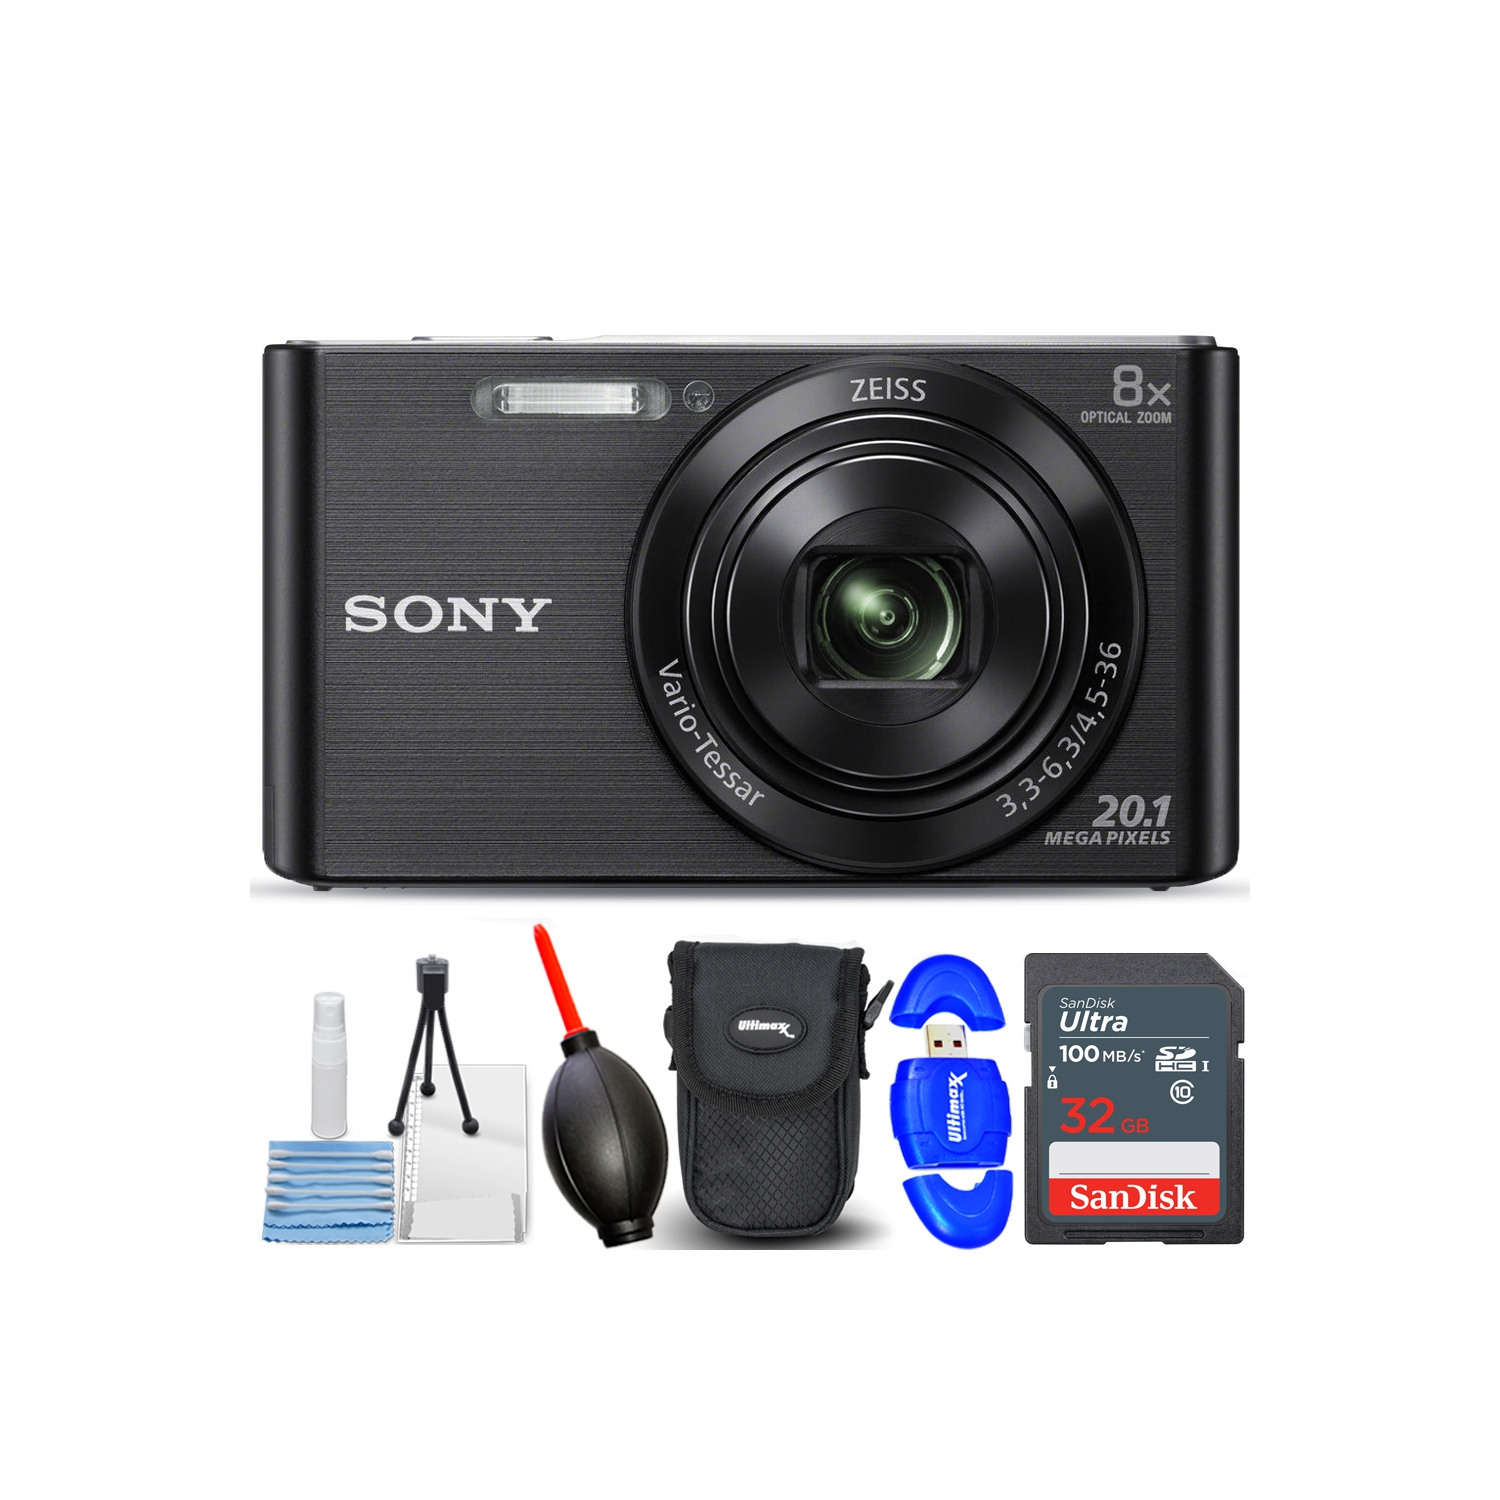 Sony DSC-W830 Digital Camera (Black) DSCW830/B - 7PC Accessory Bundle